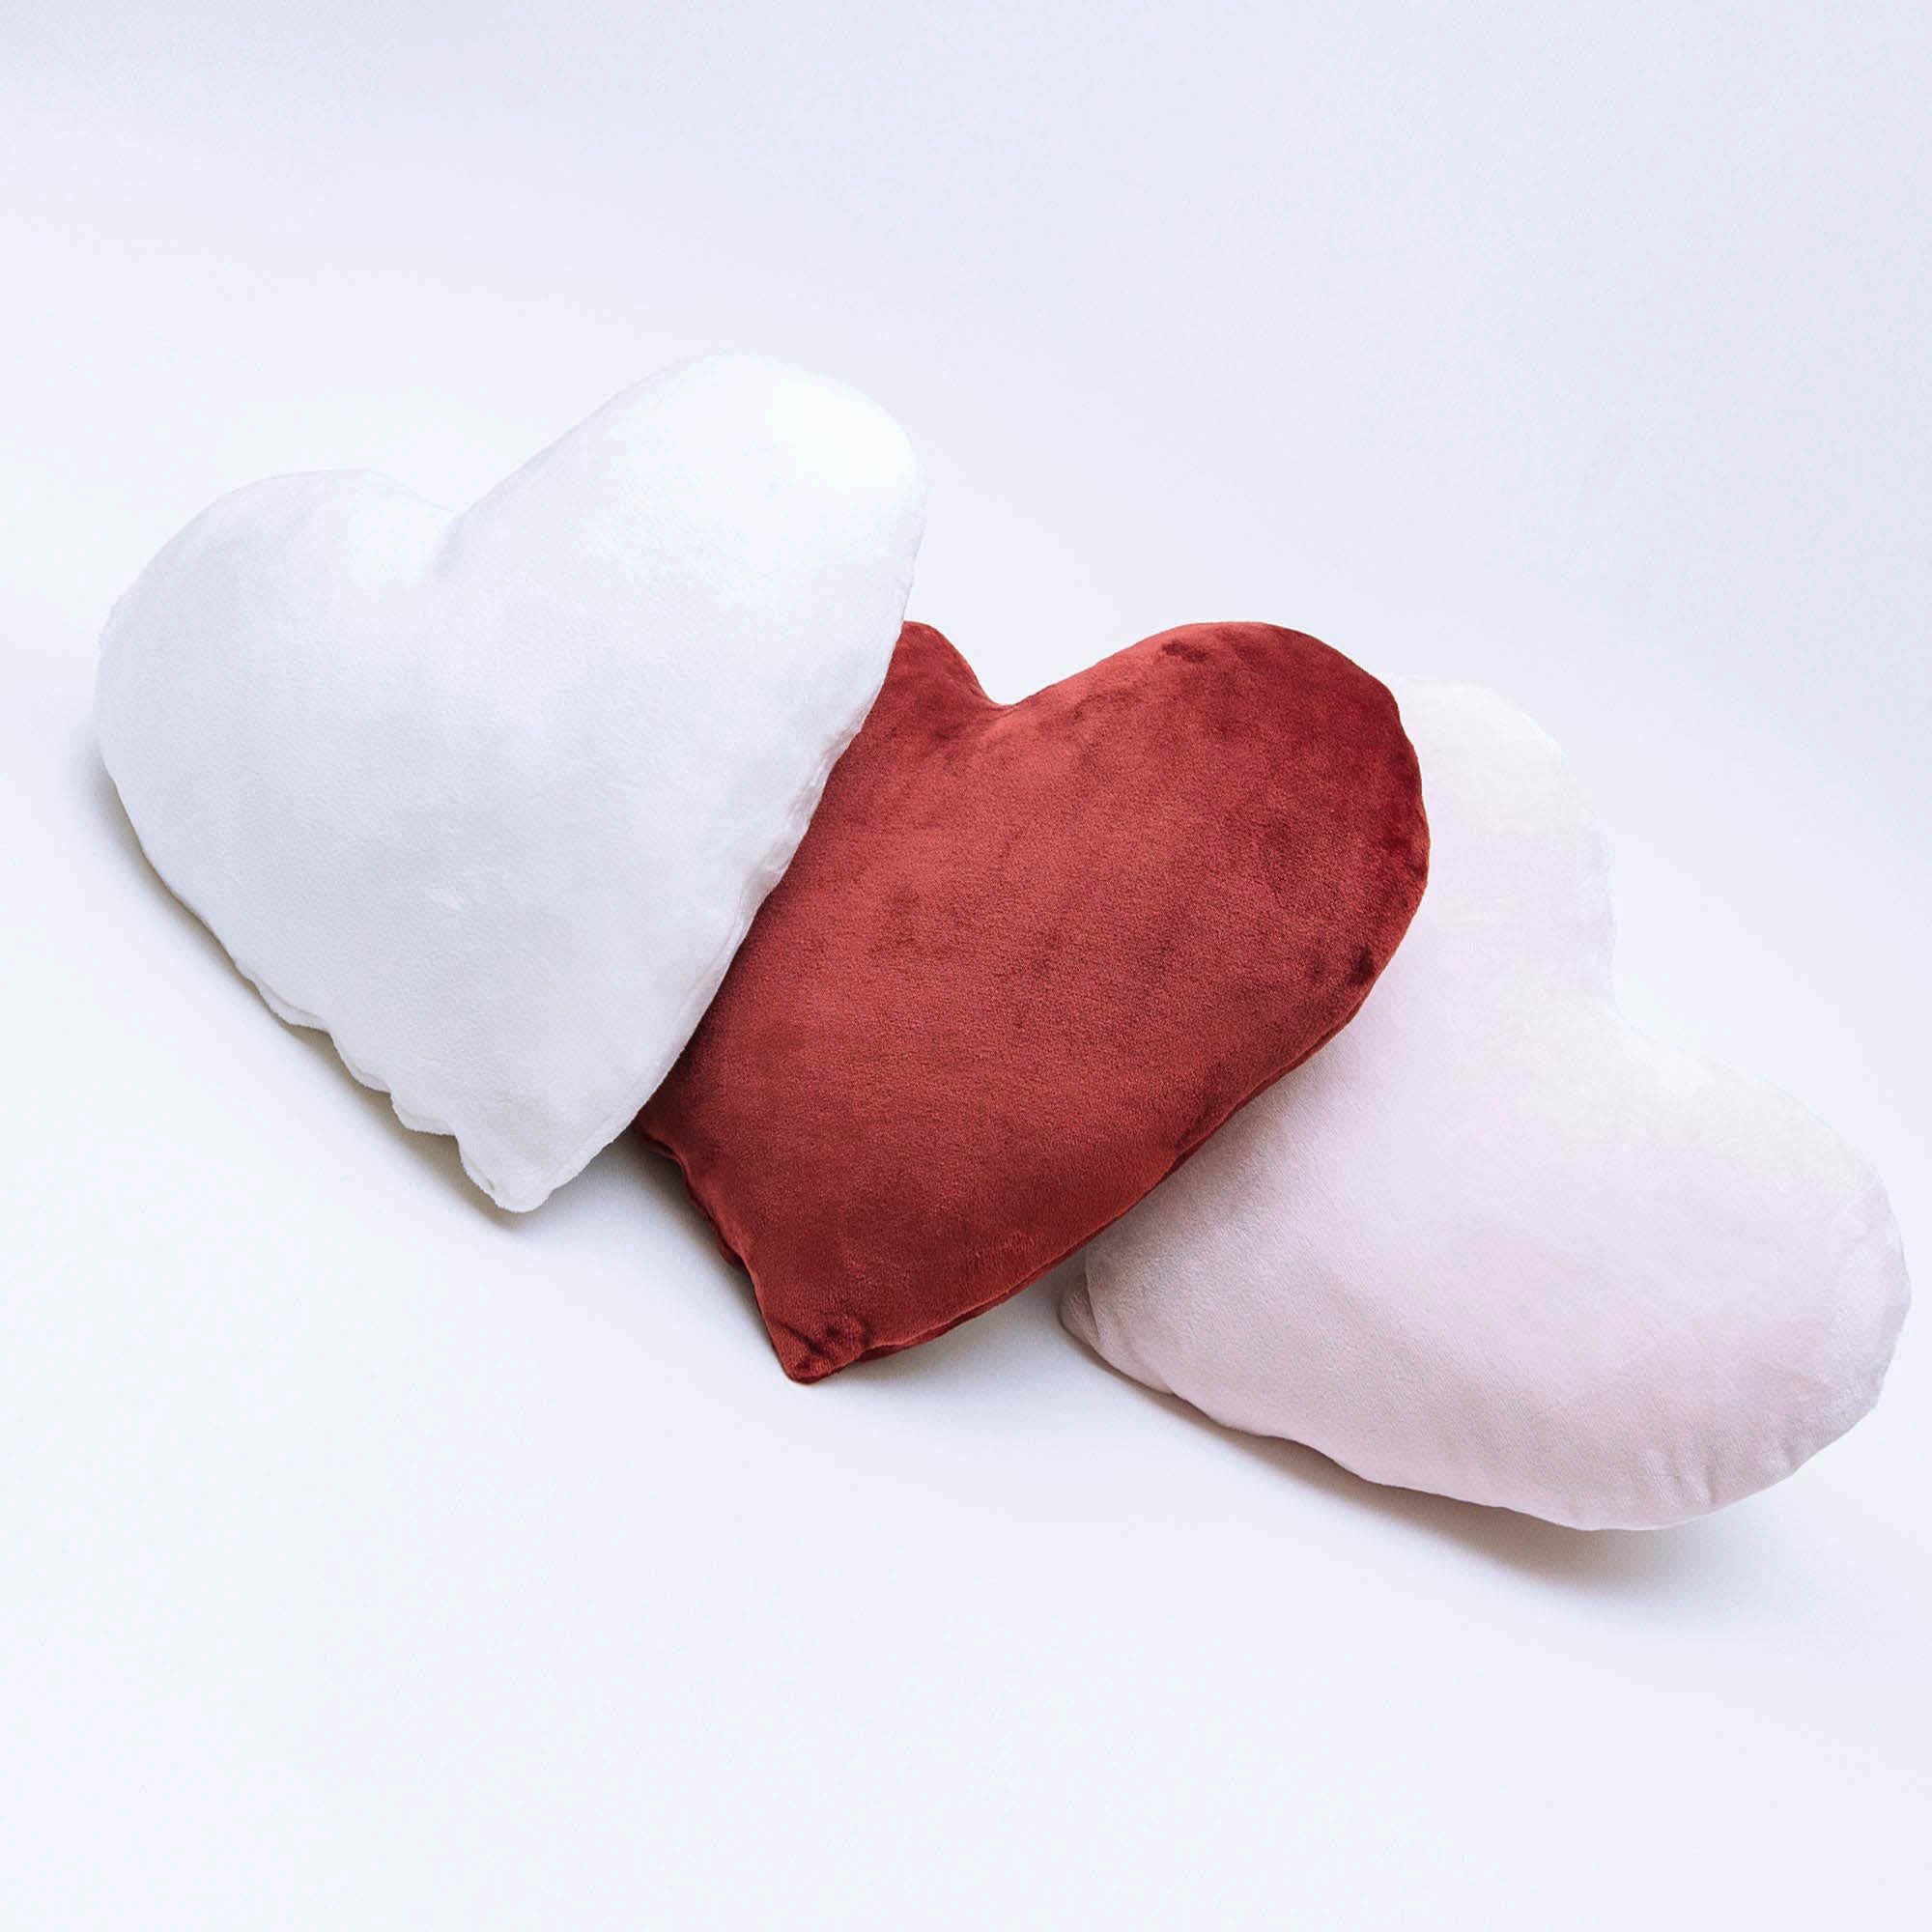 Trio Of Luster Loft Fleece heart pillows in white, red, and pale pink - luster loft fleece heart pillow - Luster Loft Fleece - American Blanket Company